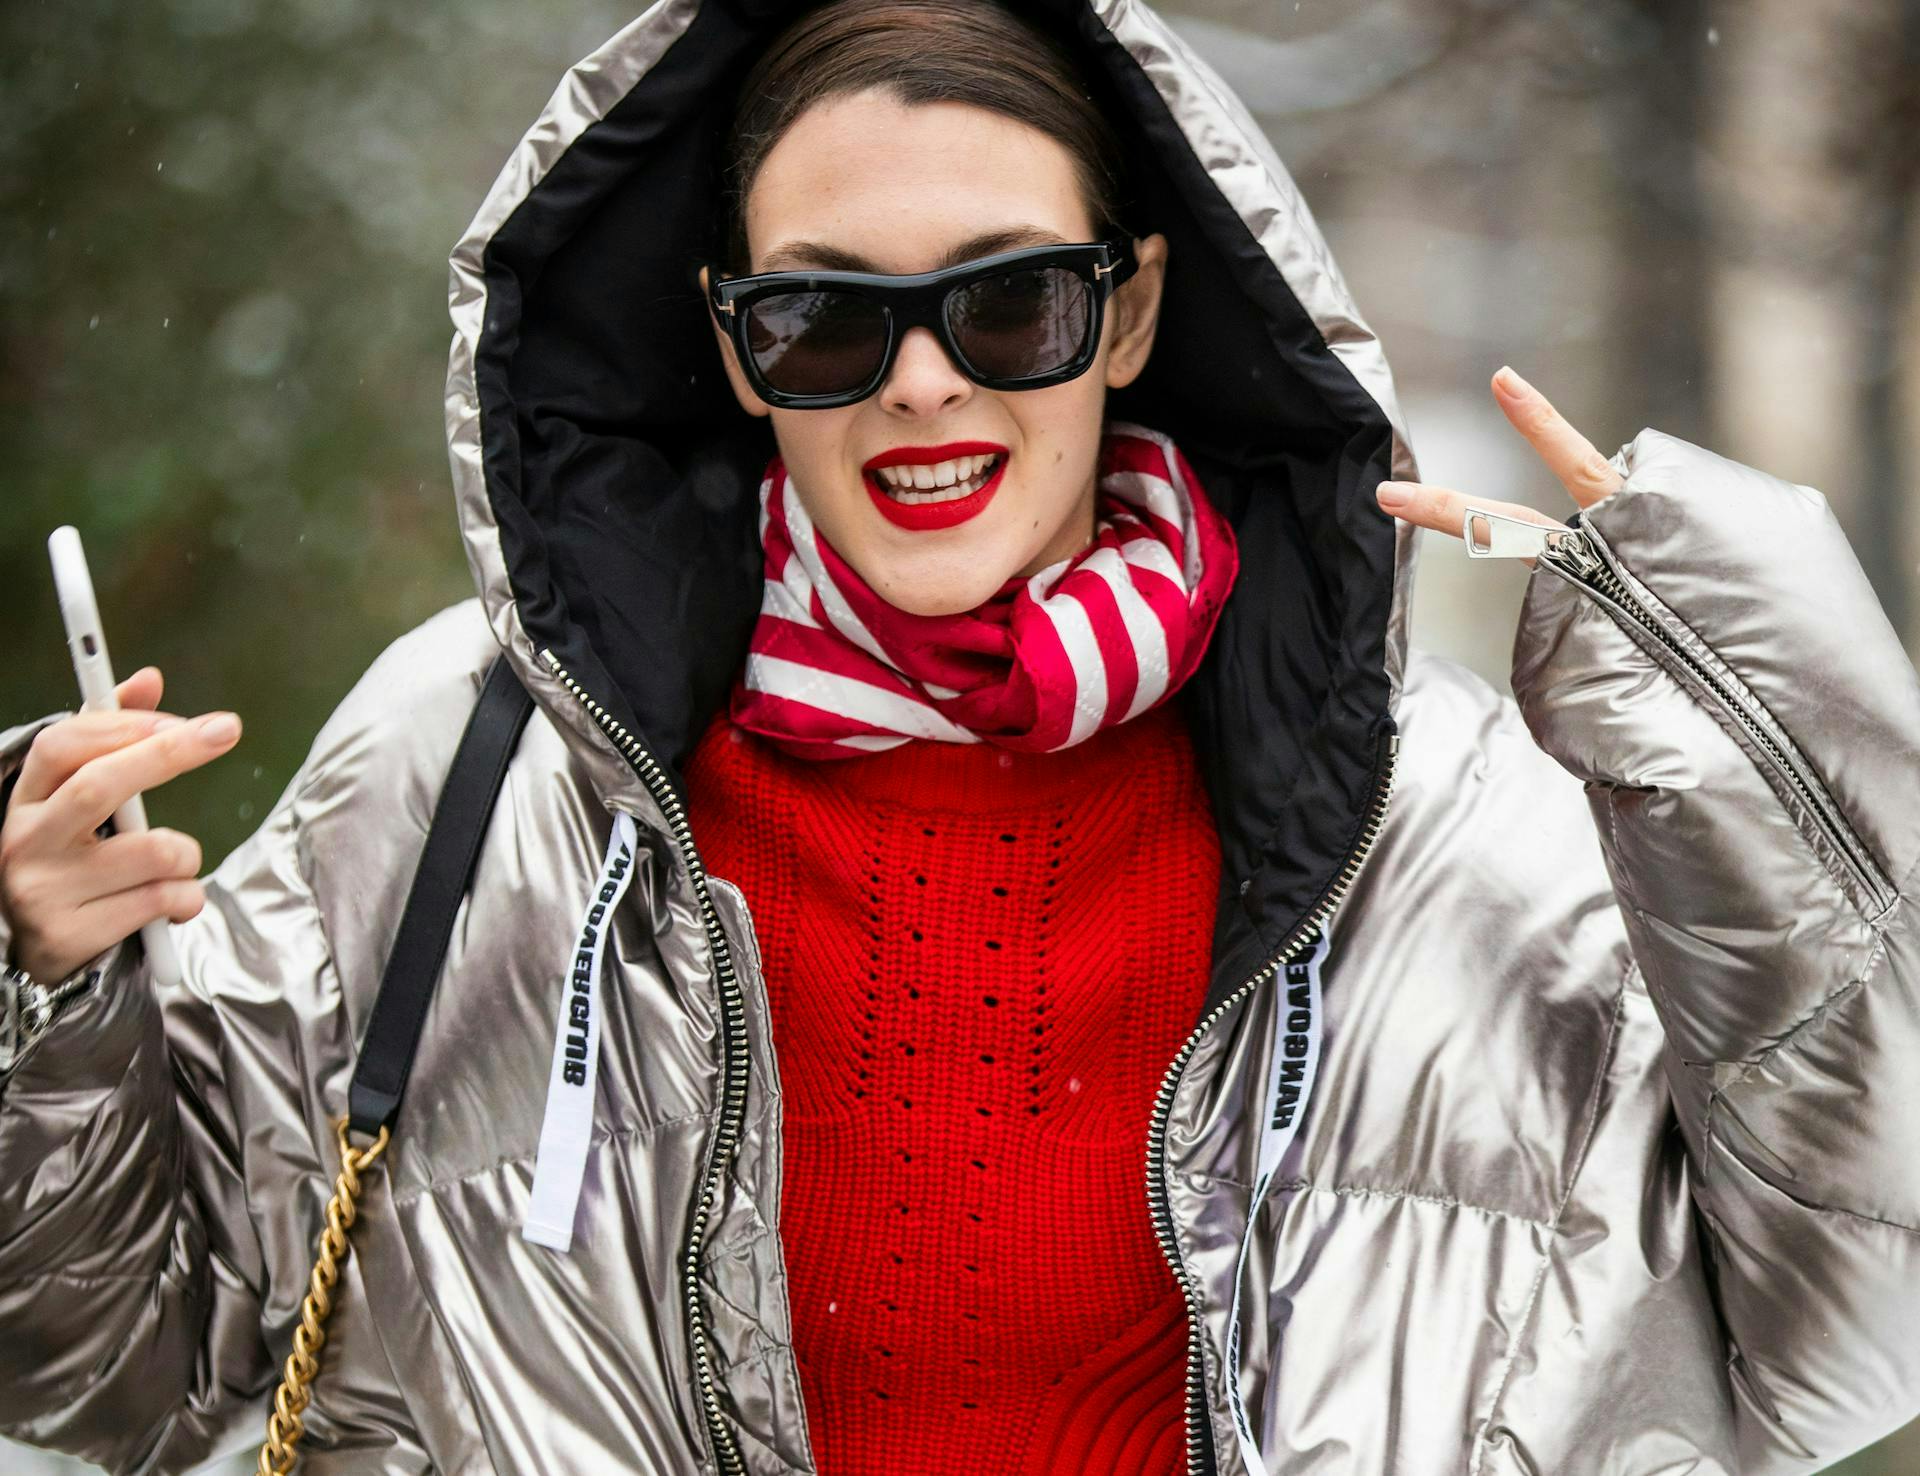 paris clothing apparel sunglasses accessories accessory hood